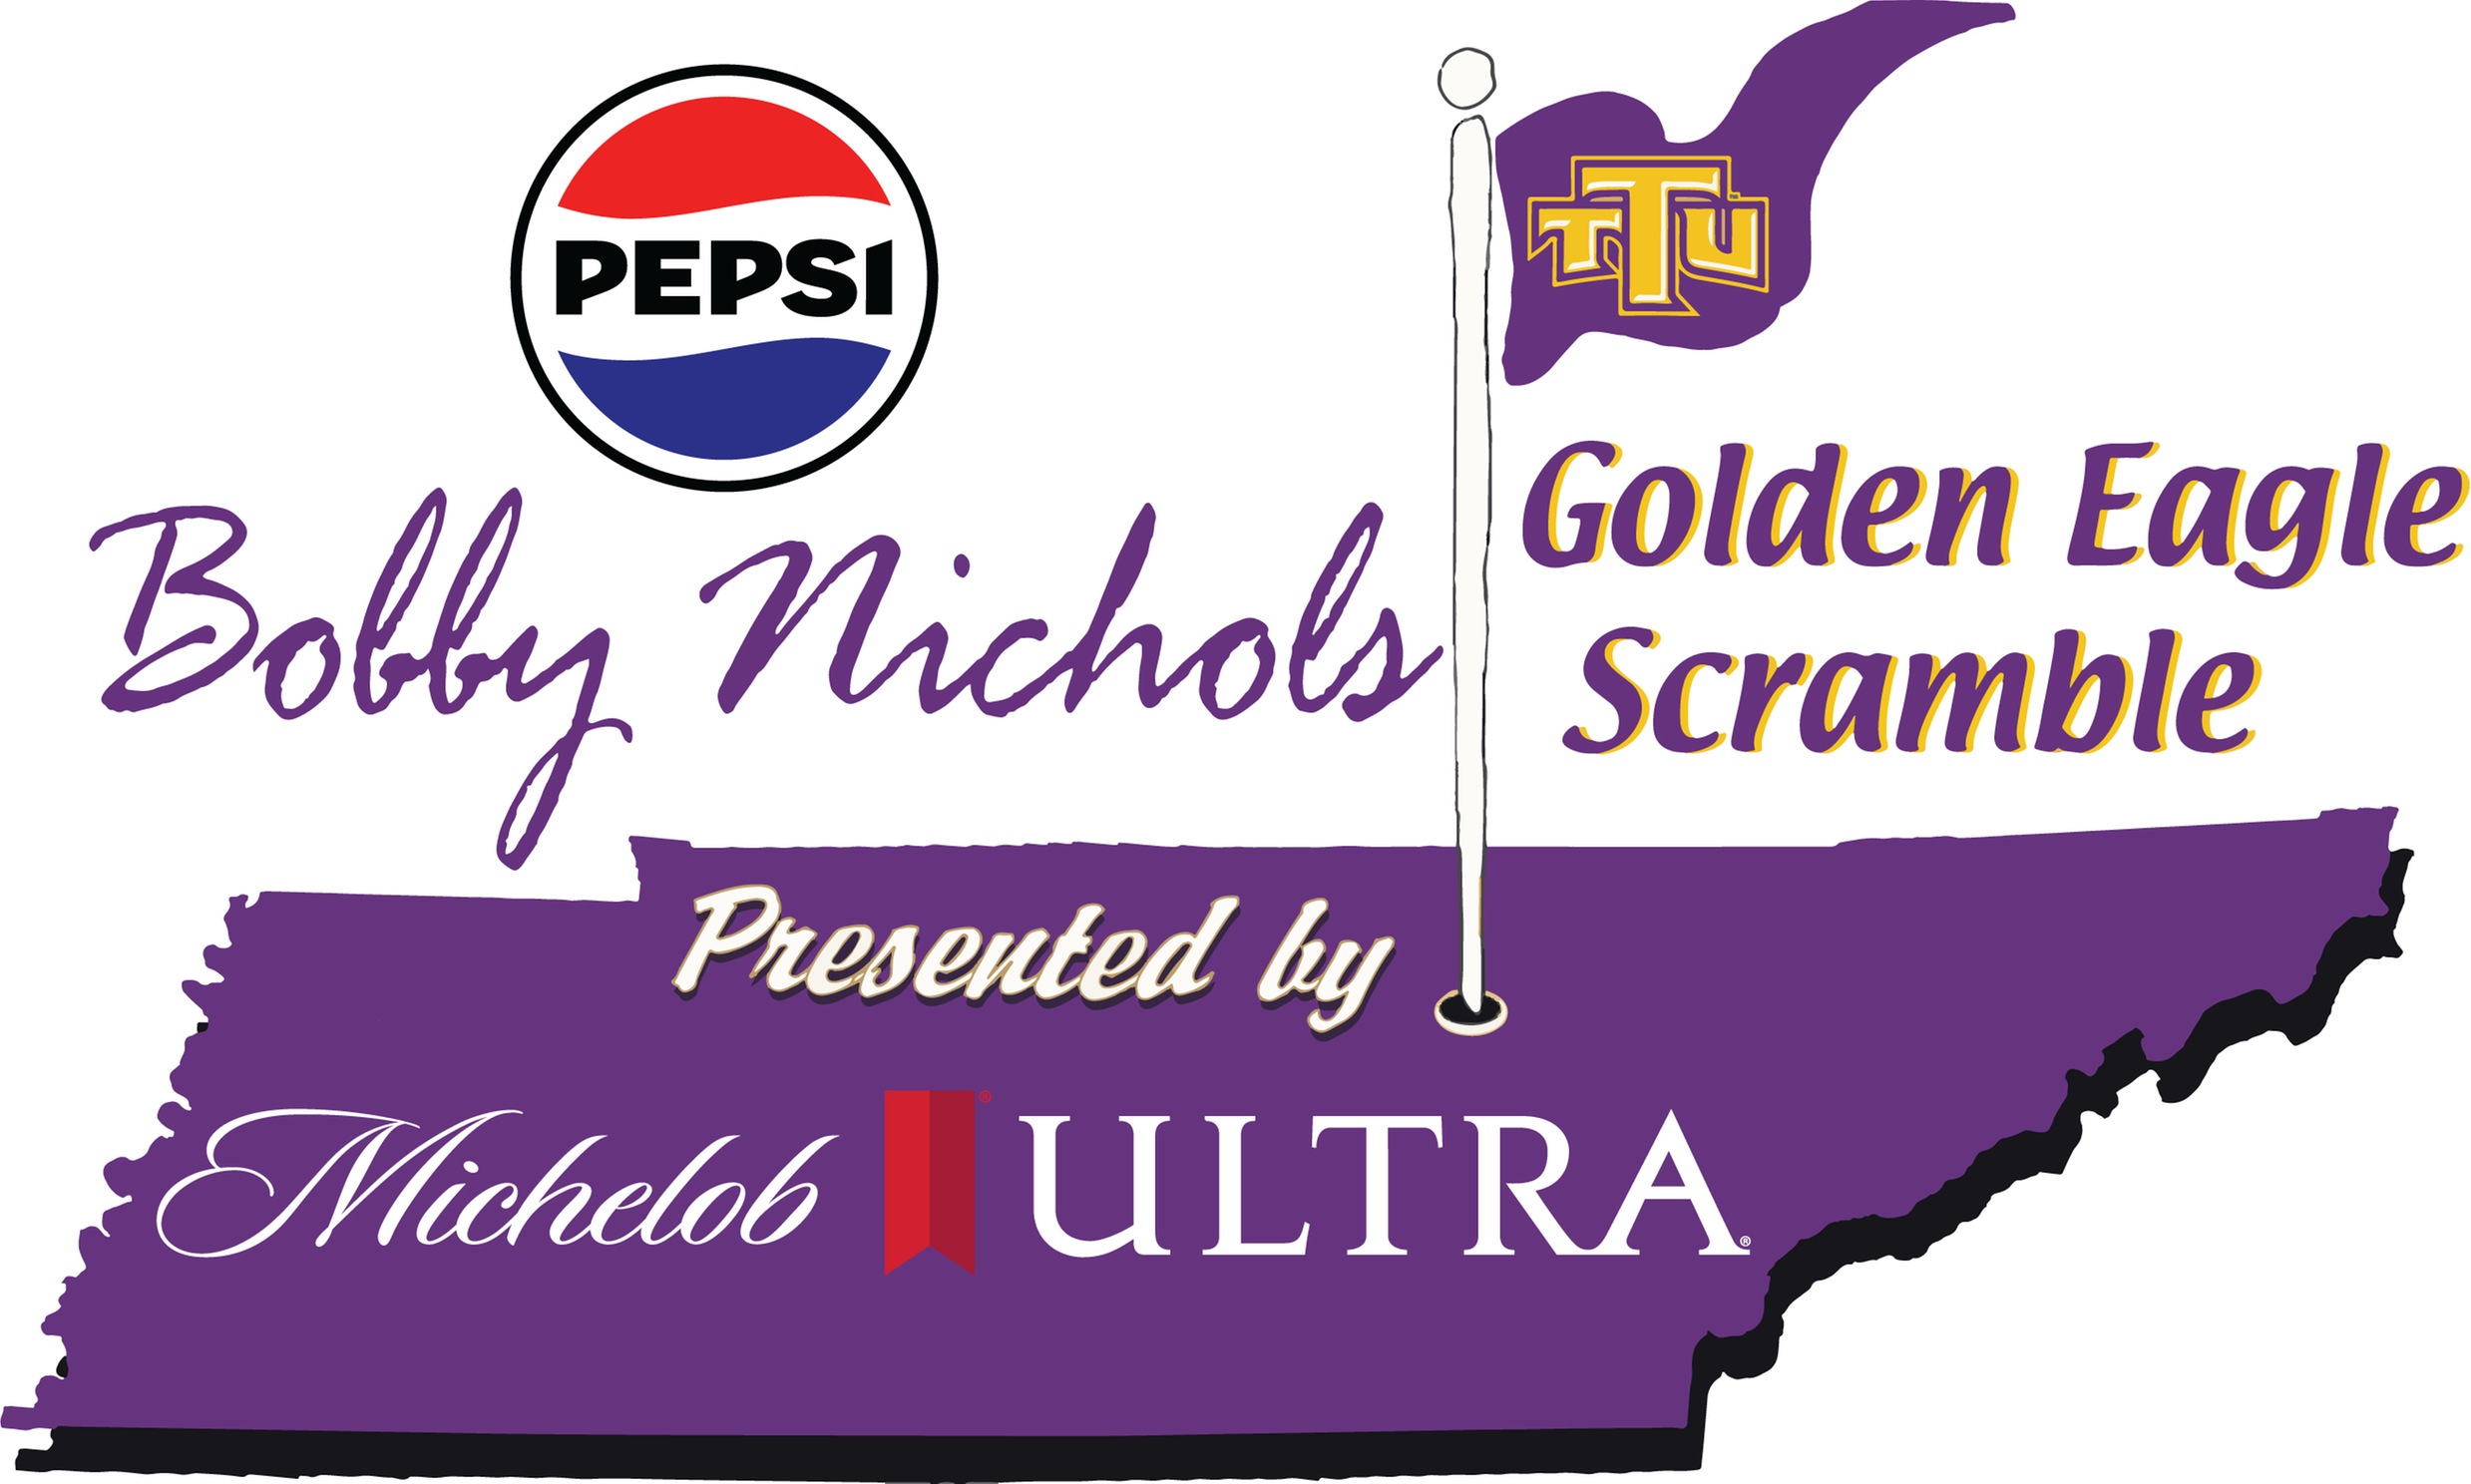 Pepsi Bobby Nichols / Golden Eagle Scramble presented by Michelob Ultra